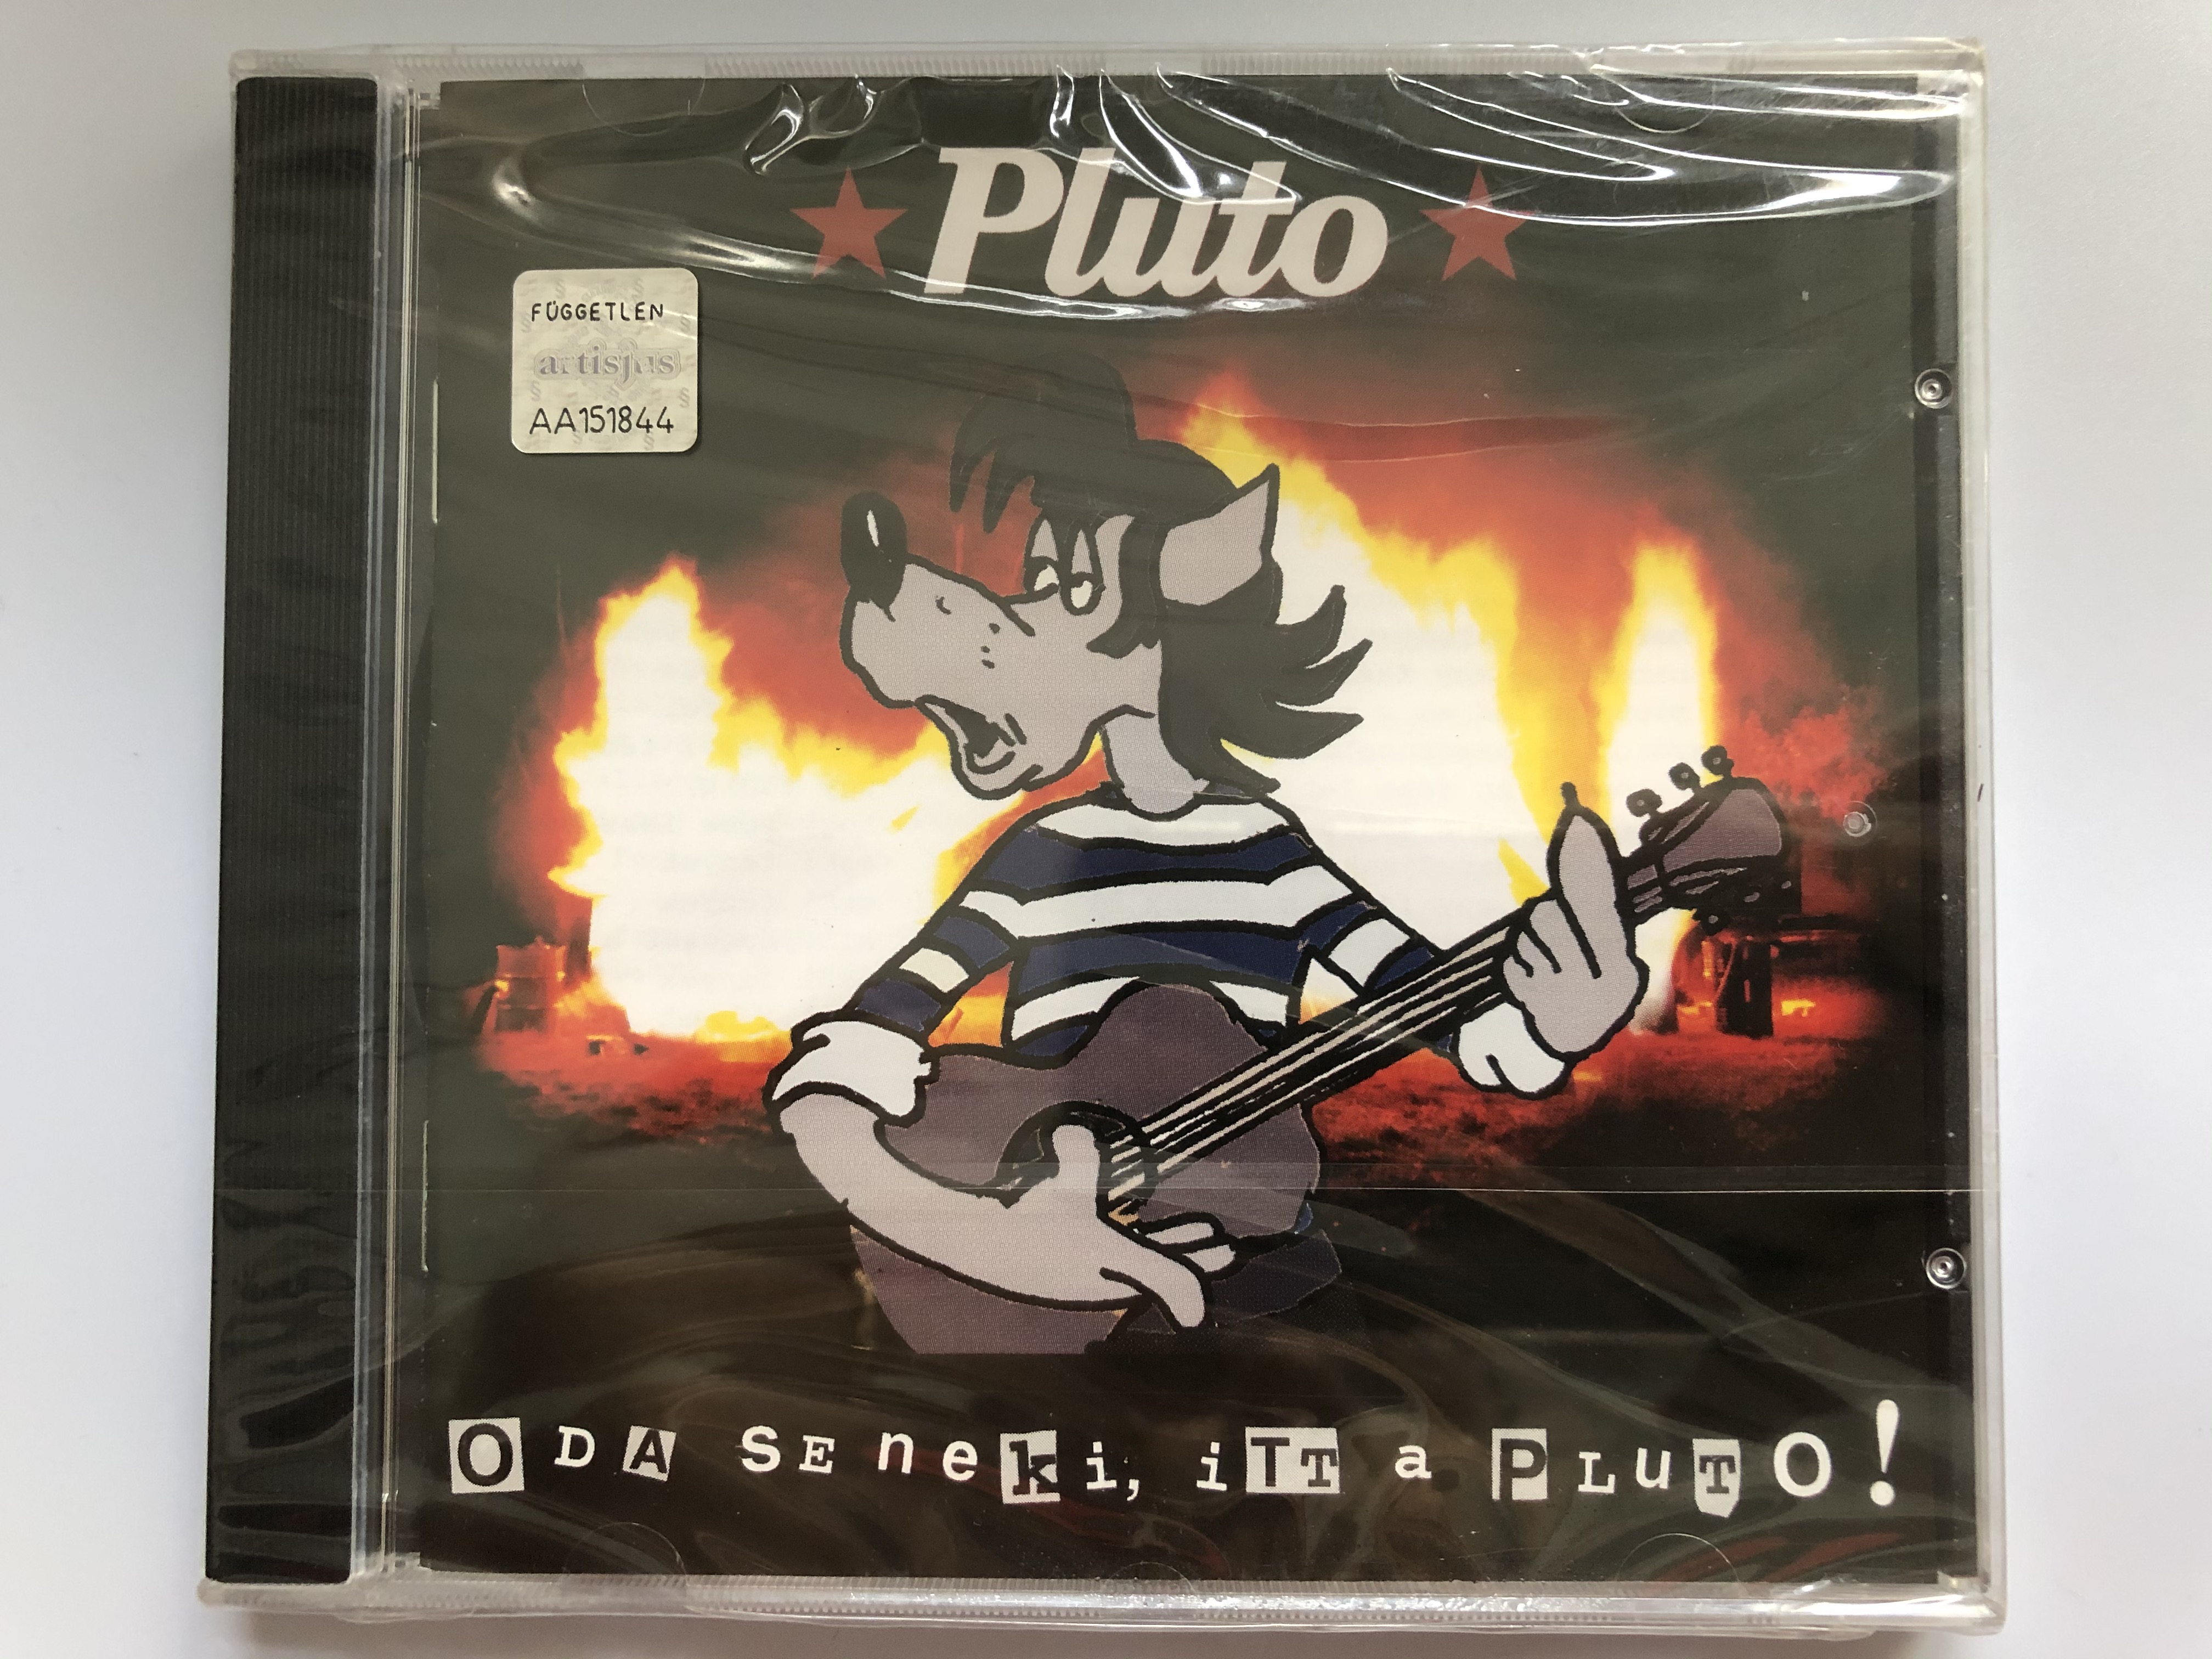 pluto-oda-se-neki-itt-a-pluto-pluto-audio-cd-2004-001-1-.jpg